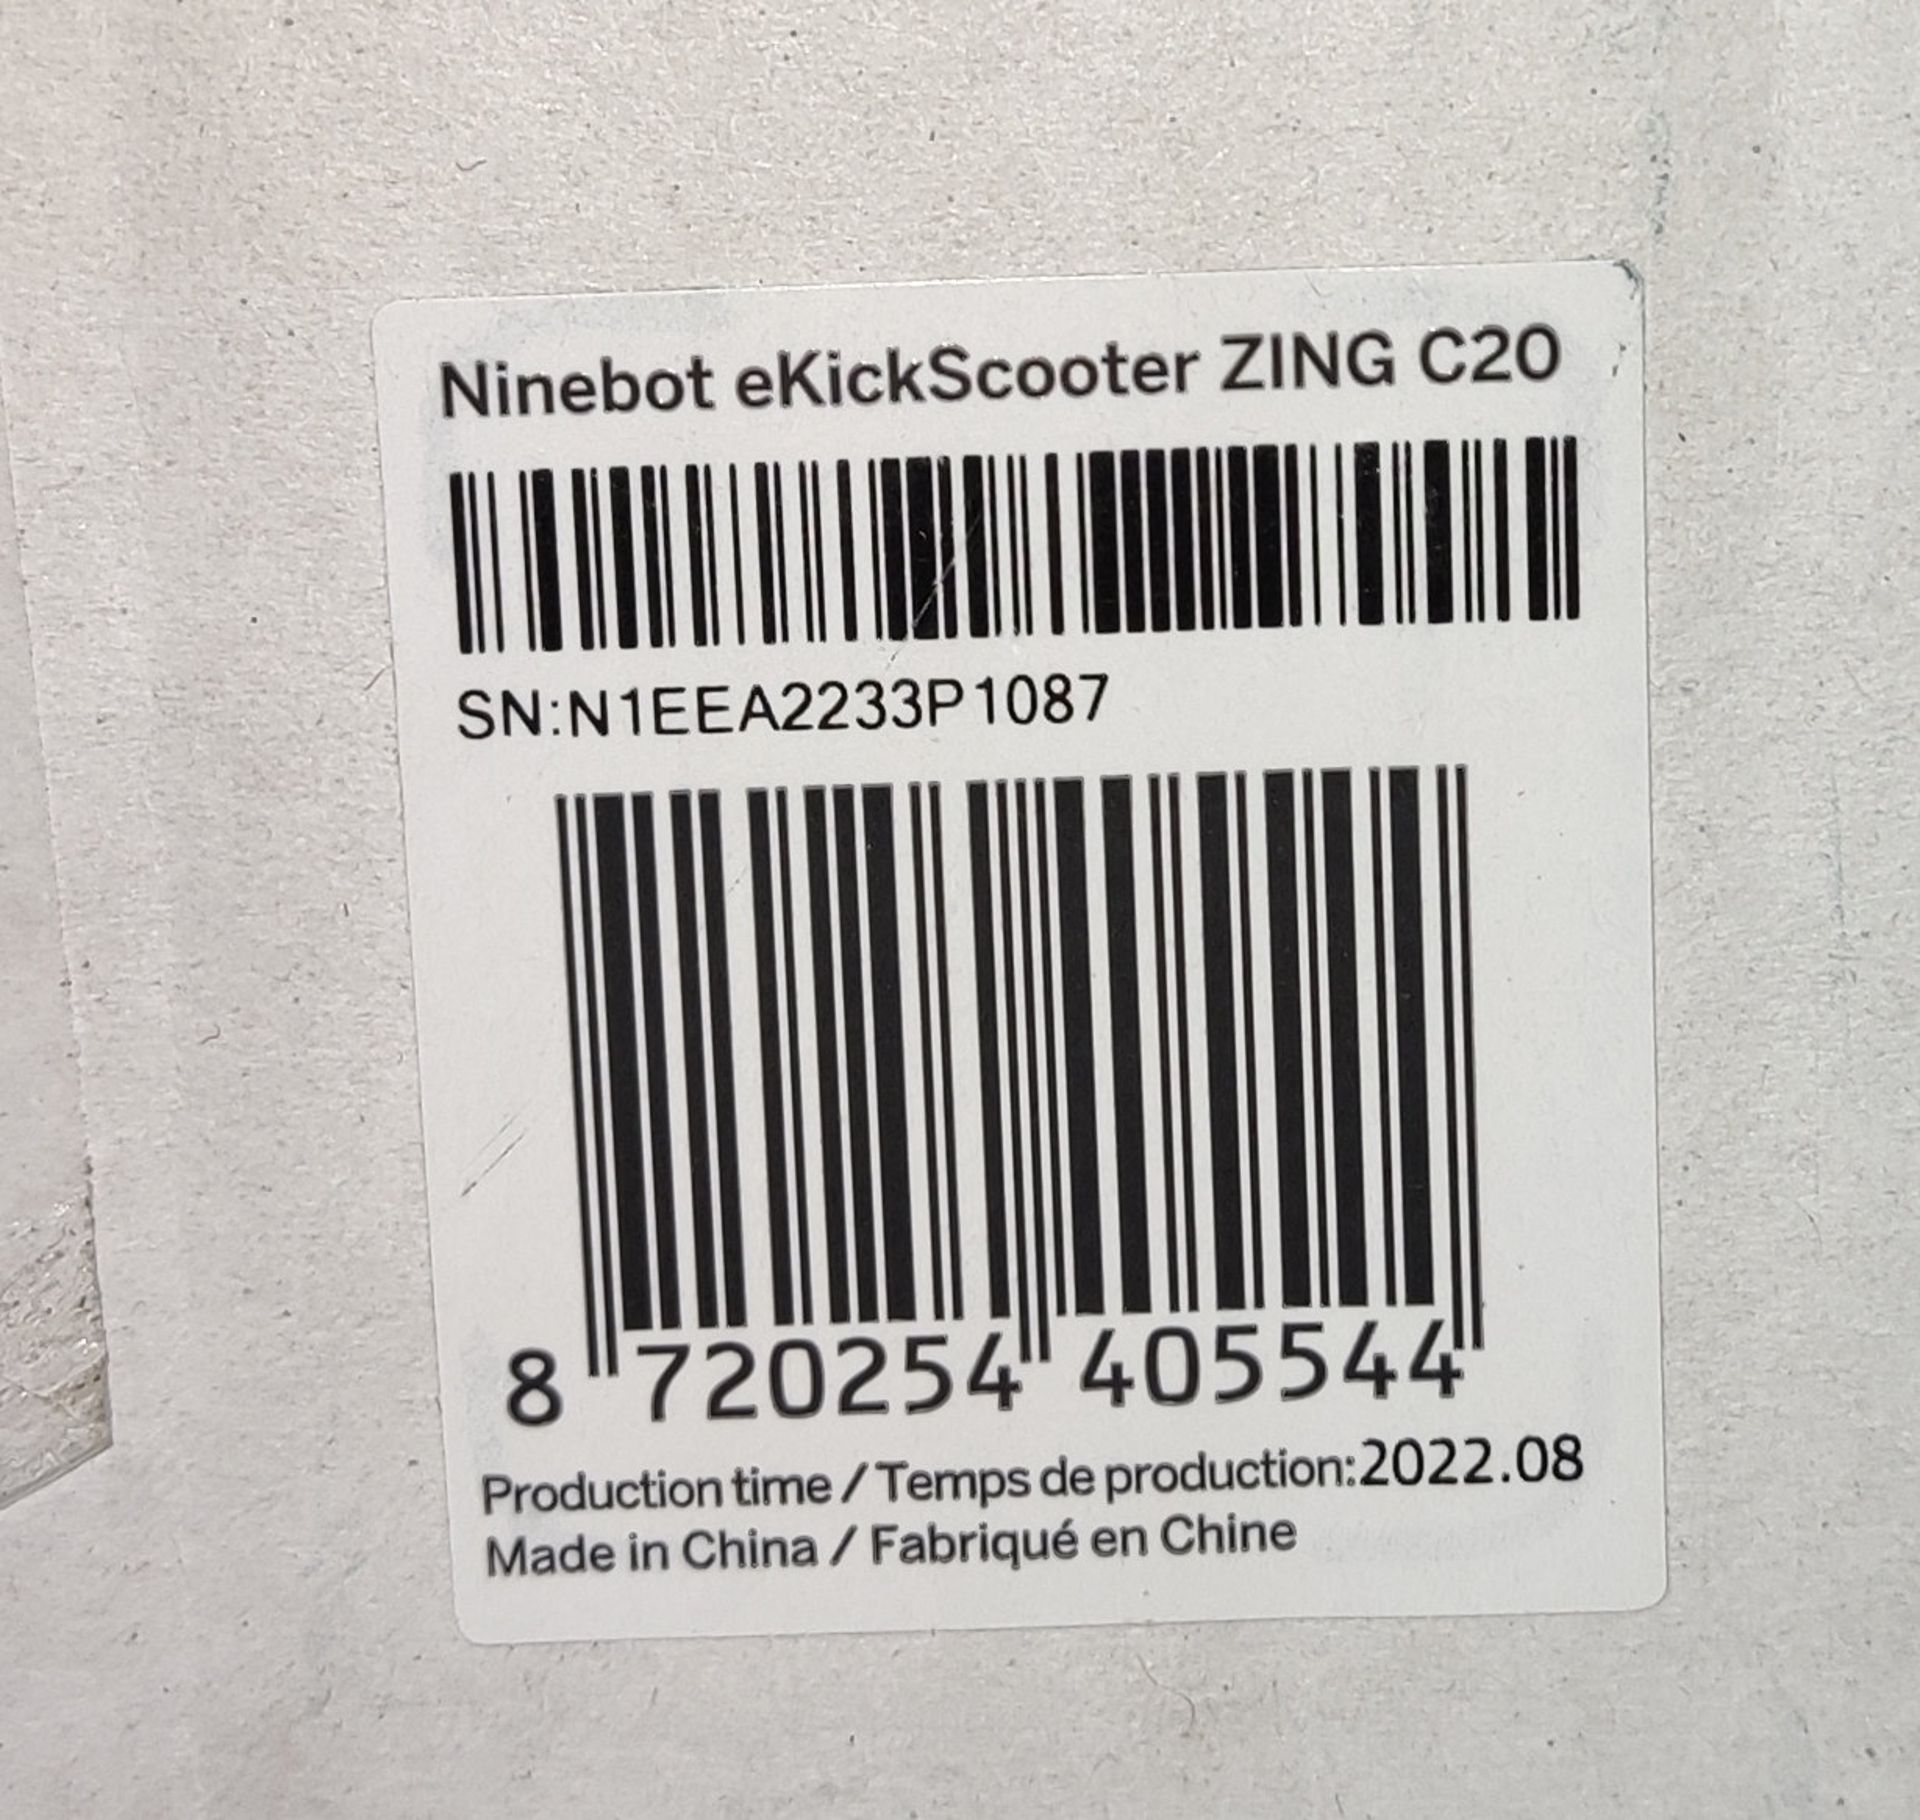 1 x SEGWAY Ninebot Zing C20 Grey Ekickscooter - Unused Boxed Stock - Original RRP £249.00 - Image 11 of 20